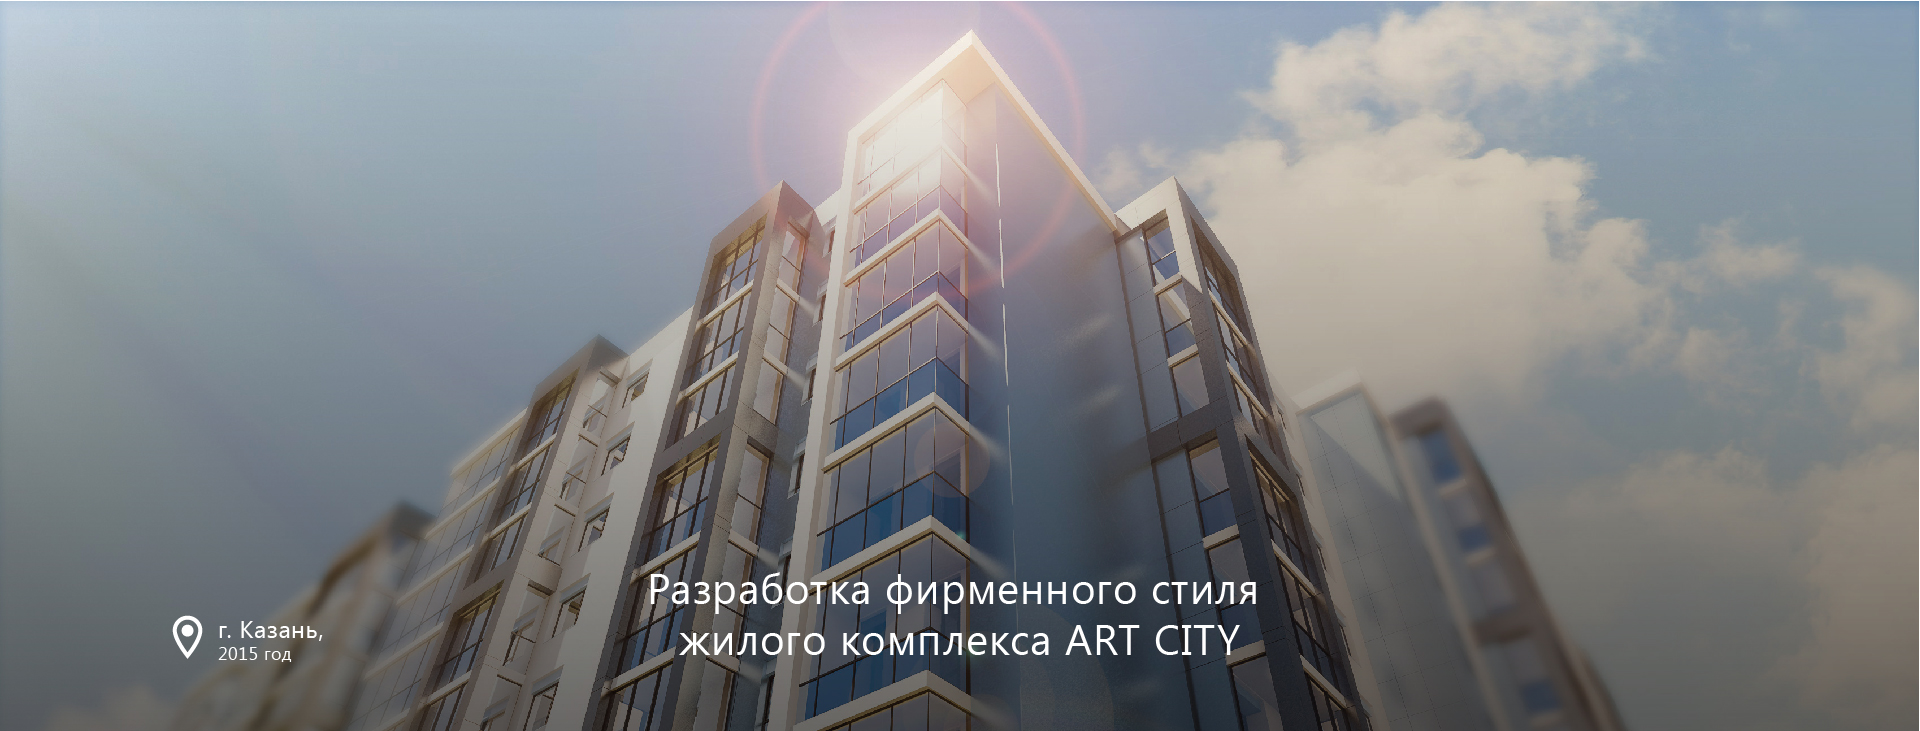 ART city  | Консалтинговое агентство GMK